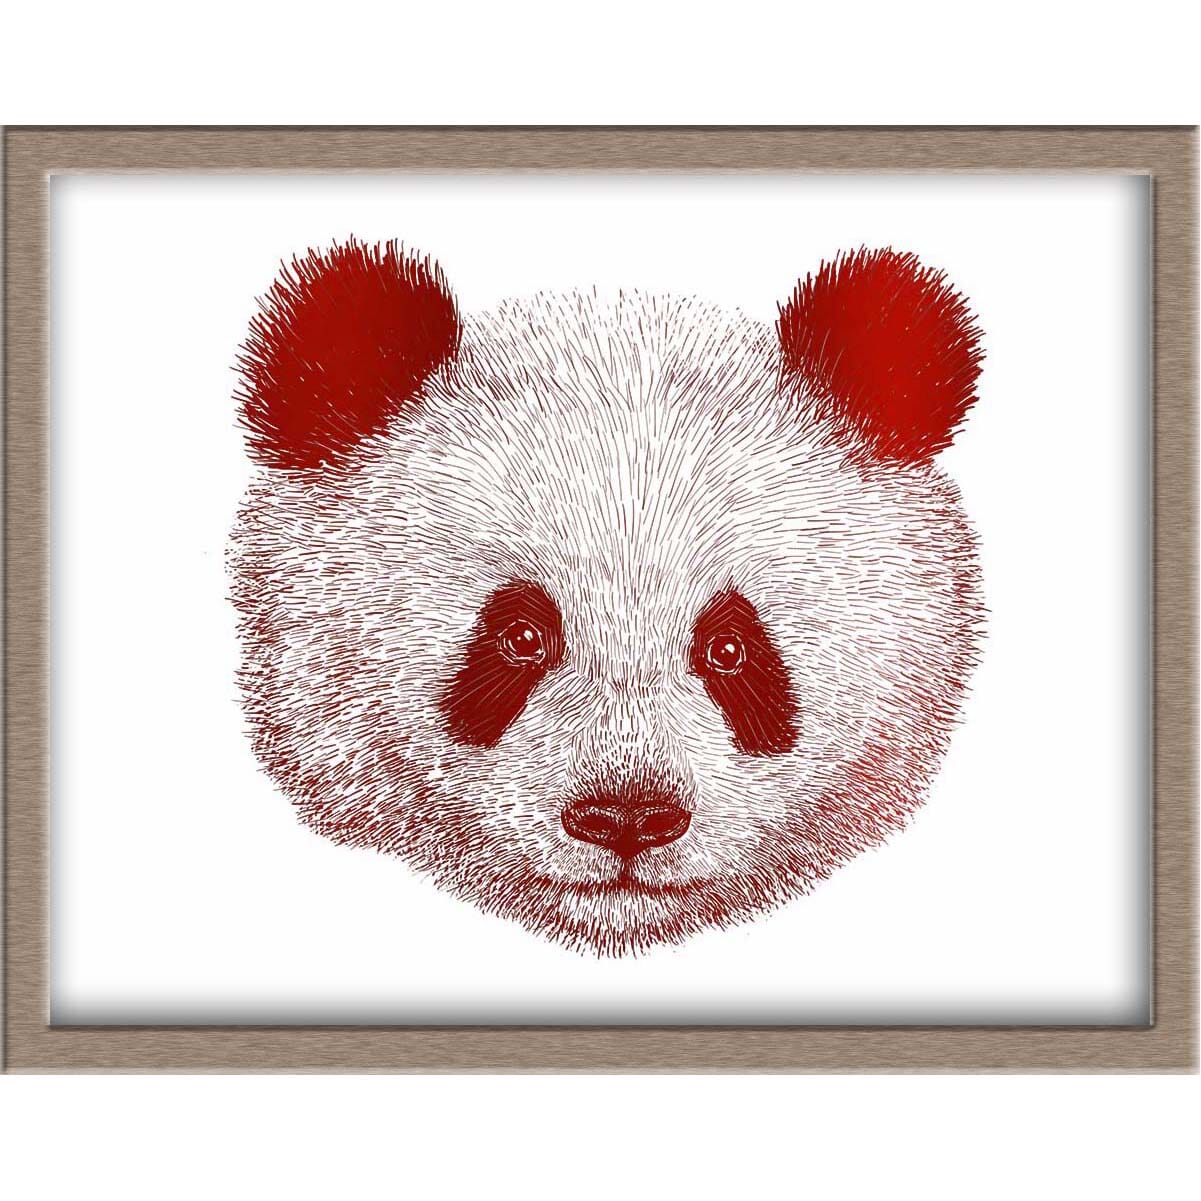 Panda Foiled Print Posters, Prints, & Visual Artwork JoyousJoyfulJoyness 